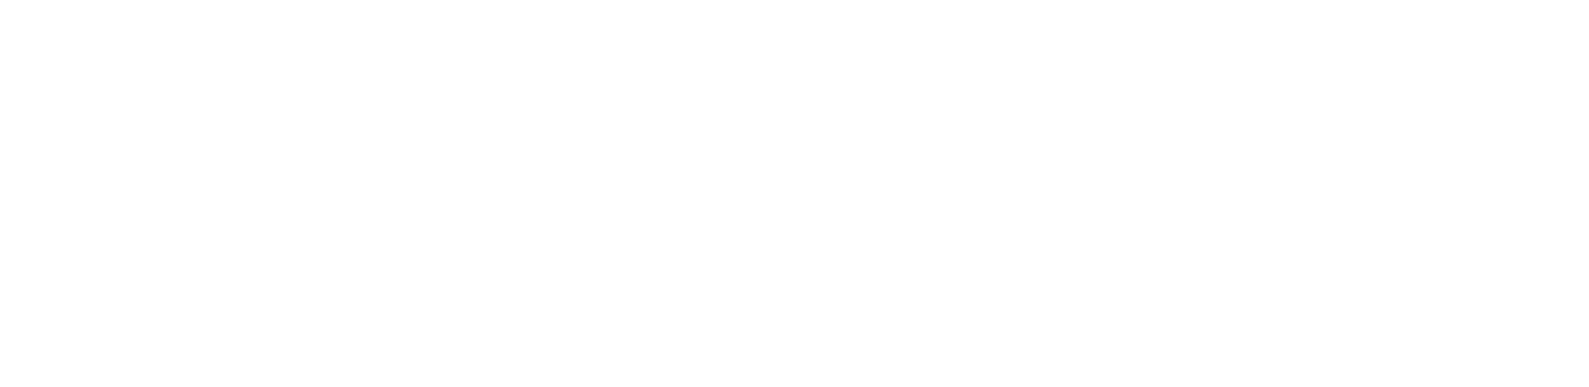 Logo schweizerhof weiss